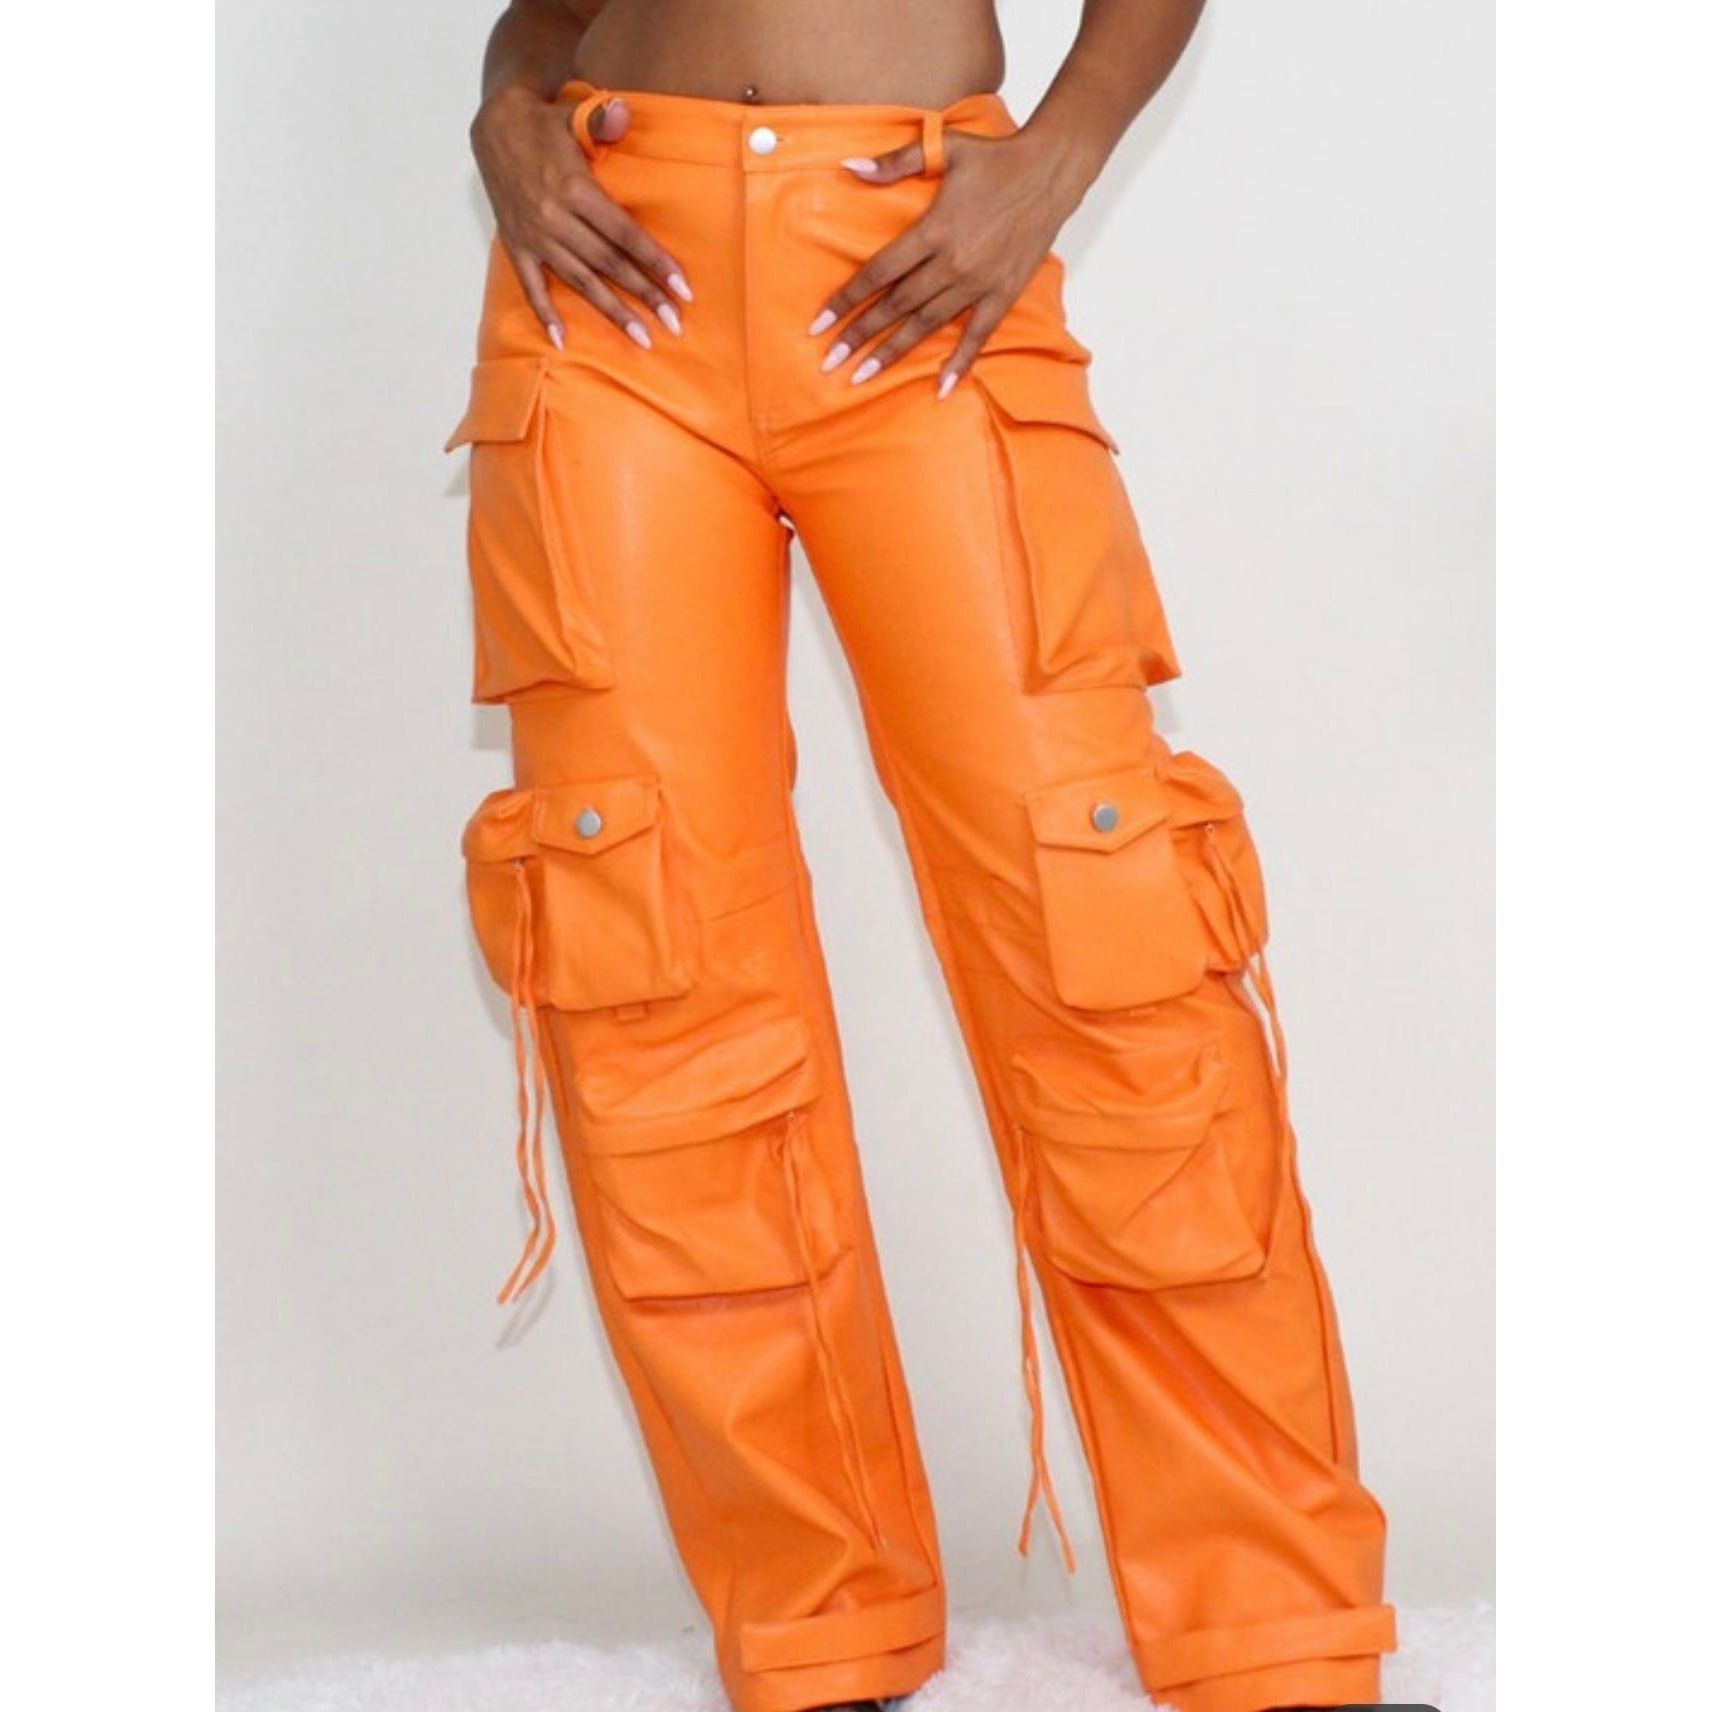 Orange PU Cargo Pants